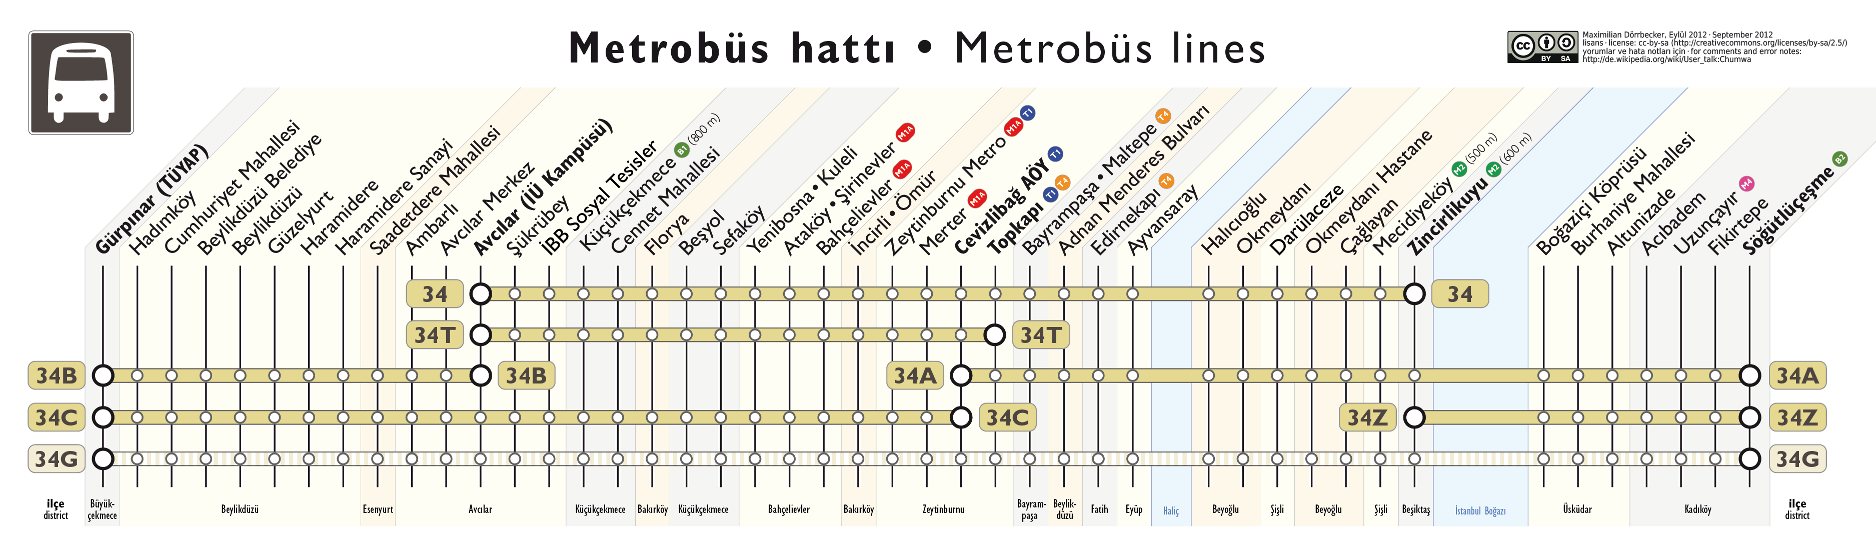 metrobus duraklari haritasi otobus saatleri